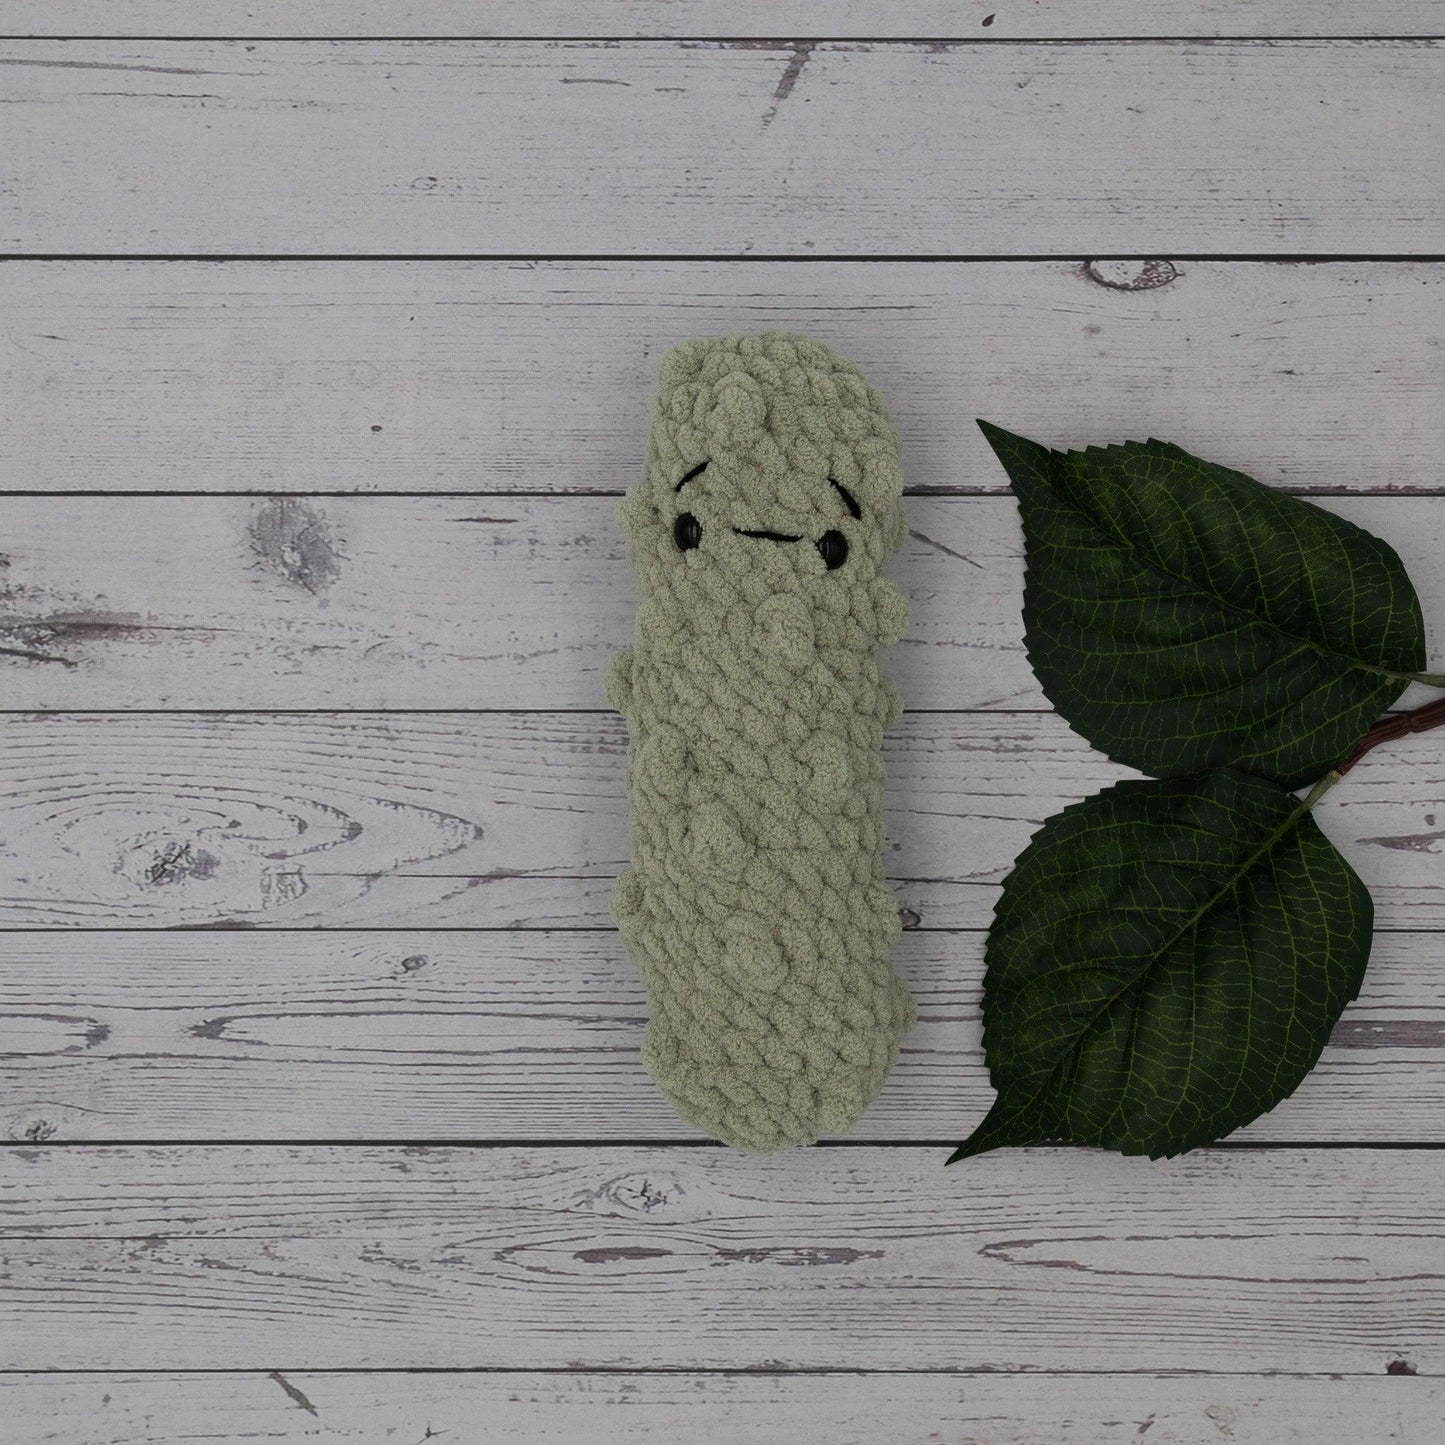 4Stitches Designs 10 Inch Crochet Pickle Plush Toy